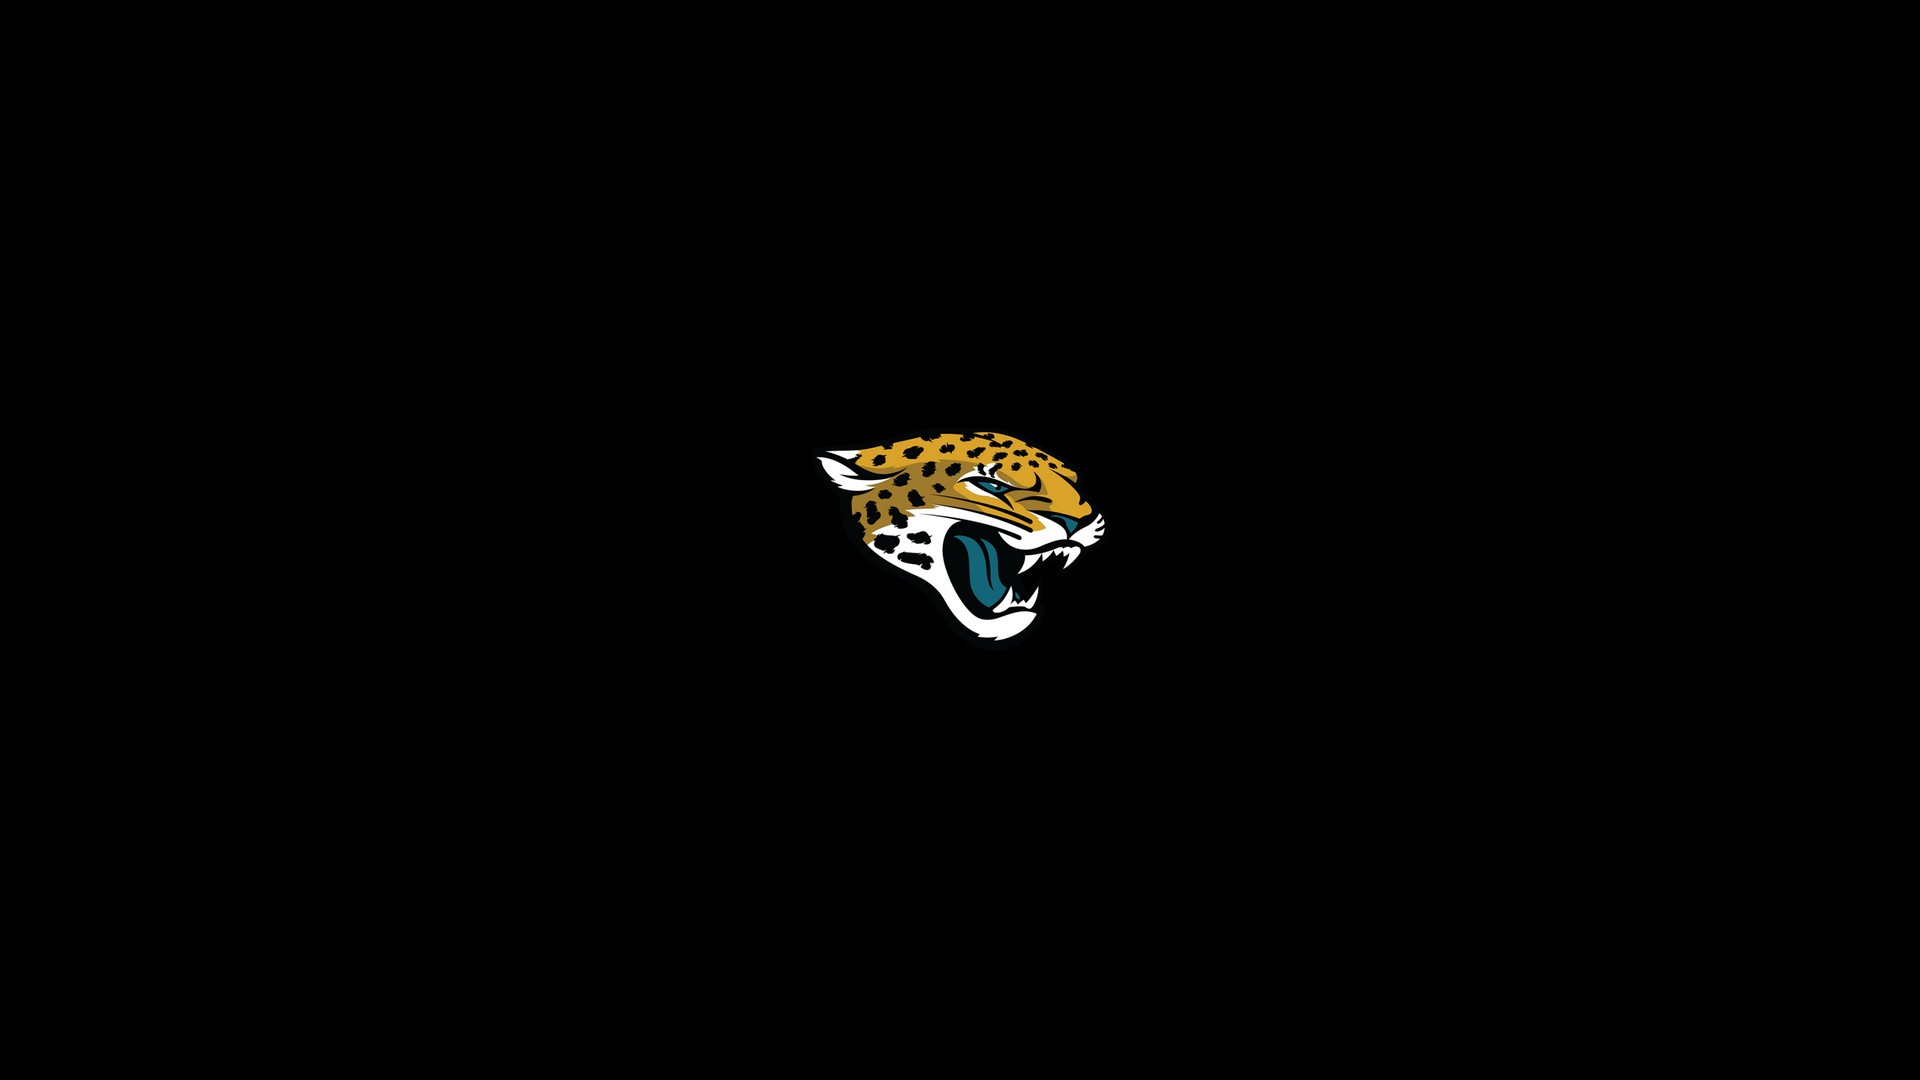 Background Jacksonville Jaguars HD Nfl Football Wallpaper